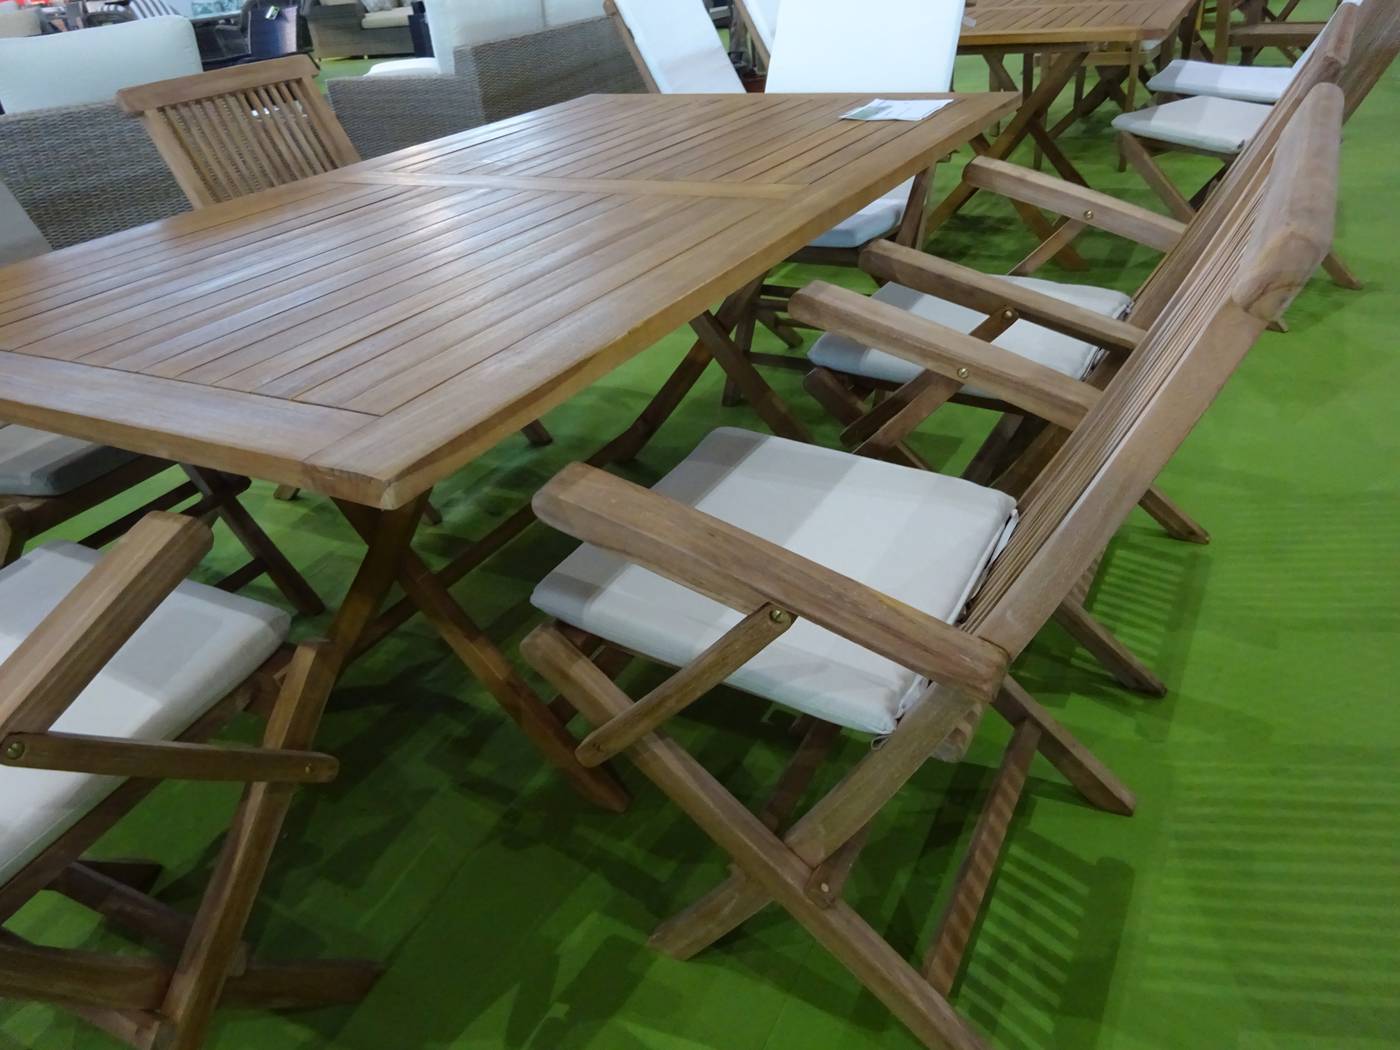 Conjunto Teka Ecija/Seroni 170-6 - Conjunto de jardín: mesa de madera de teka, plegable de 170 cm y 6 sillones con cojín asiento